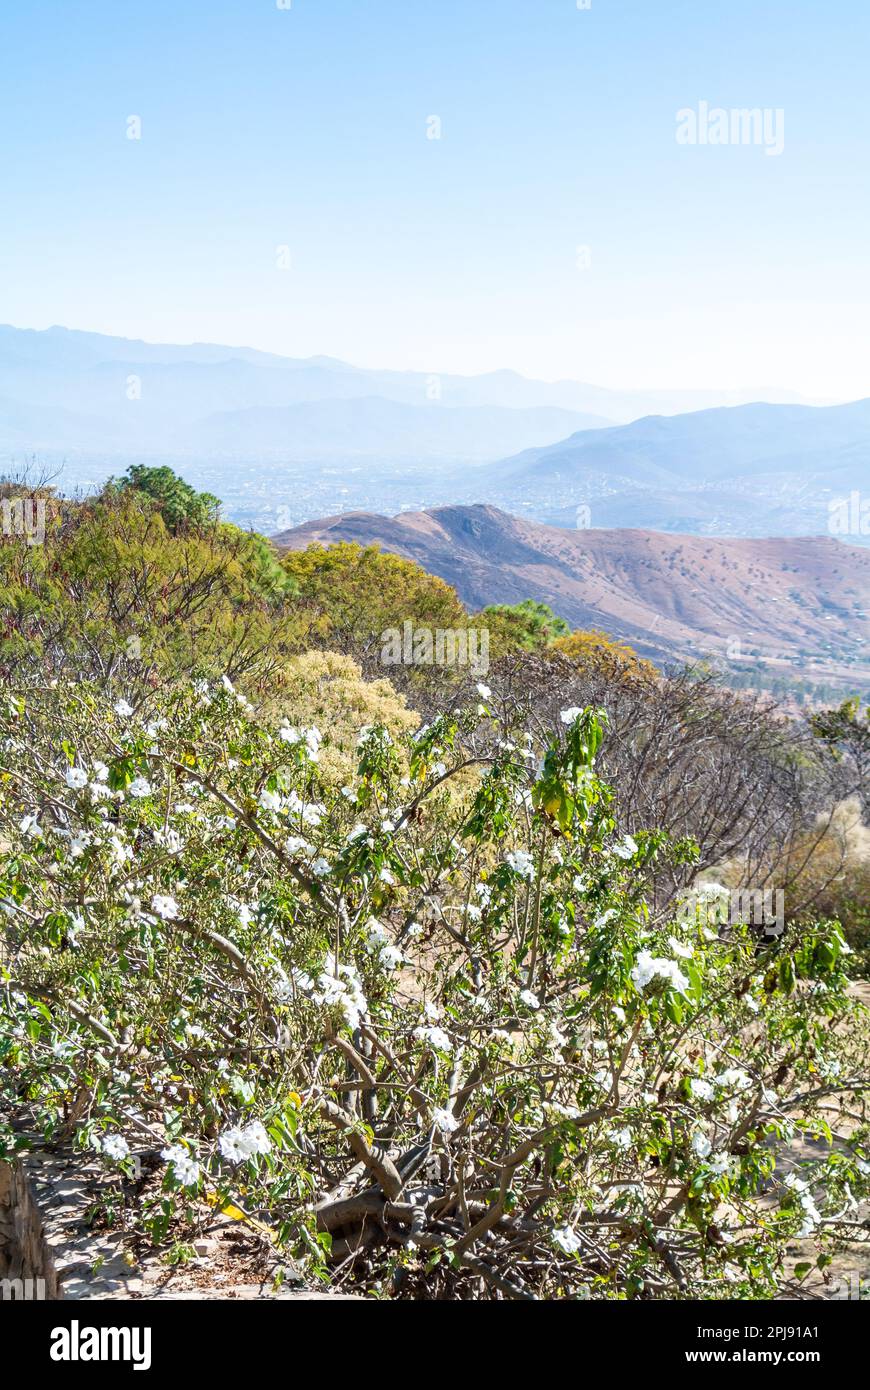 Monte Alban, Oaxaca de Juárez, Mexico, Ipomoea arborescens or tree morning glory with a landscape Oaxaca region seen from Monte Alban Stock Photo